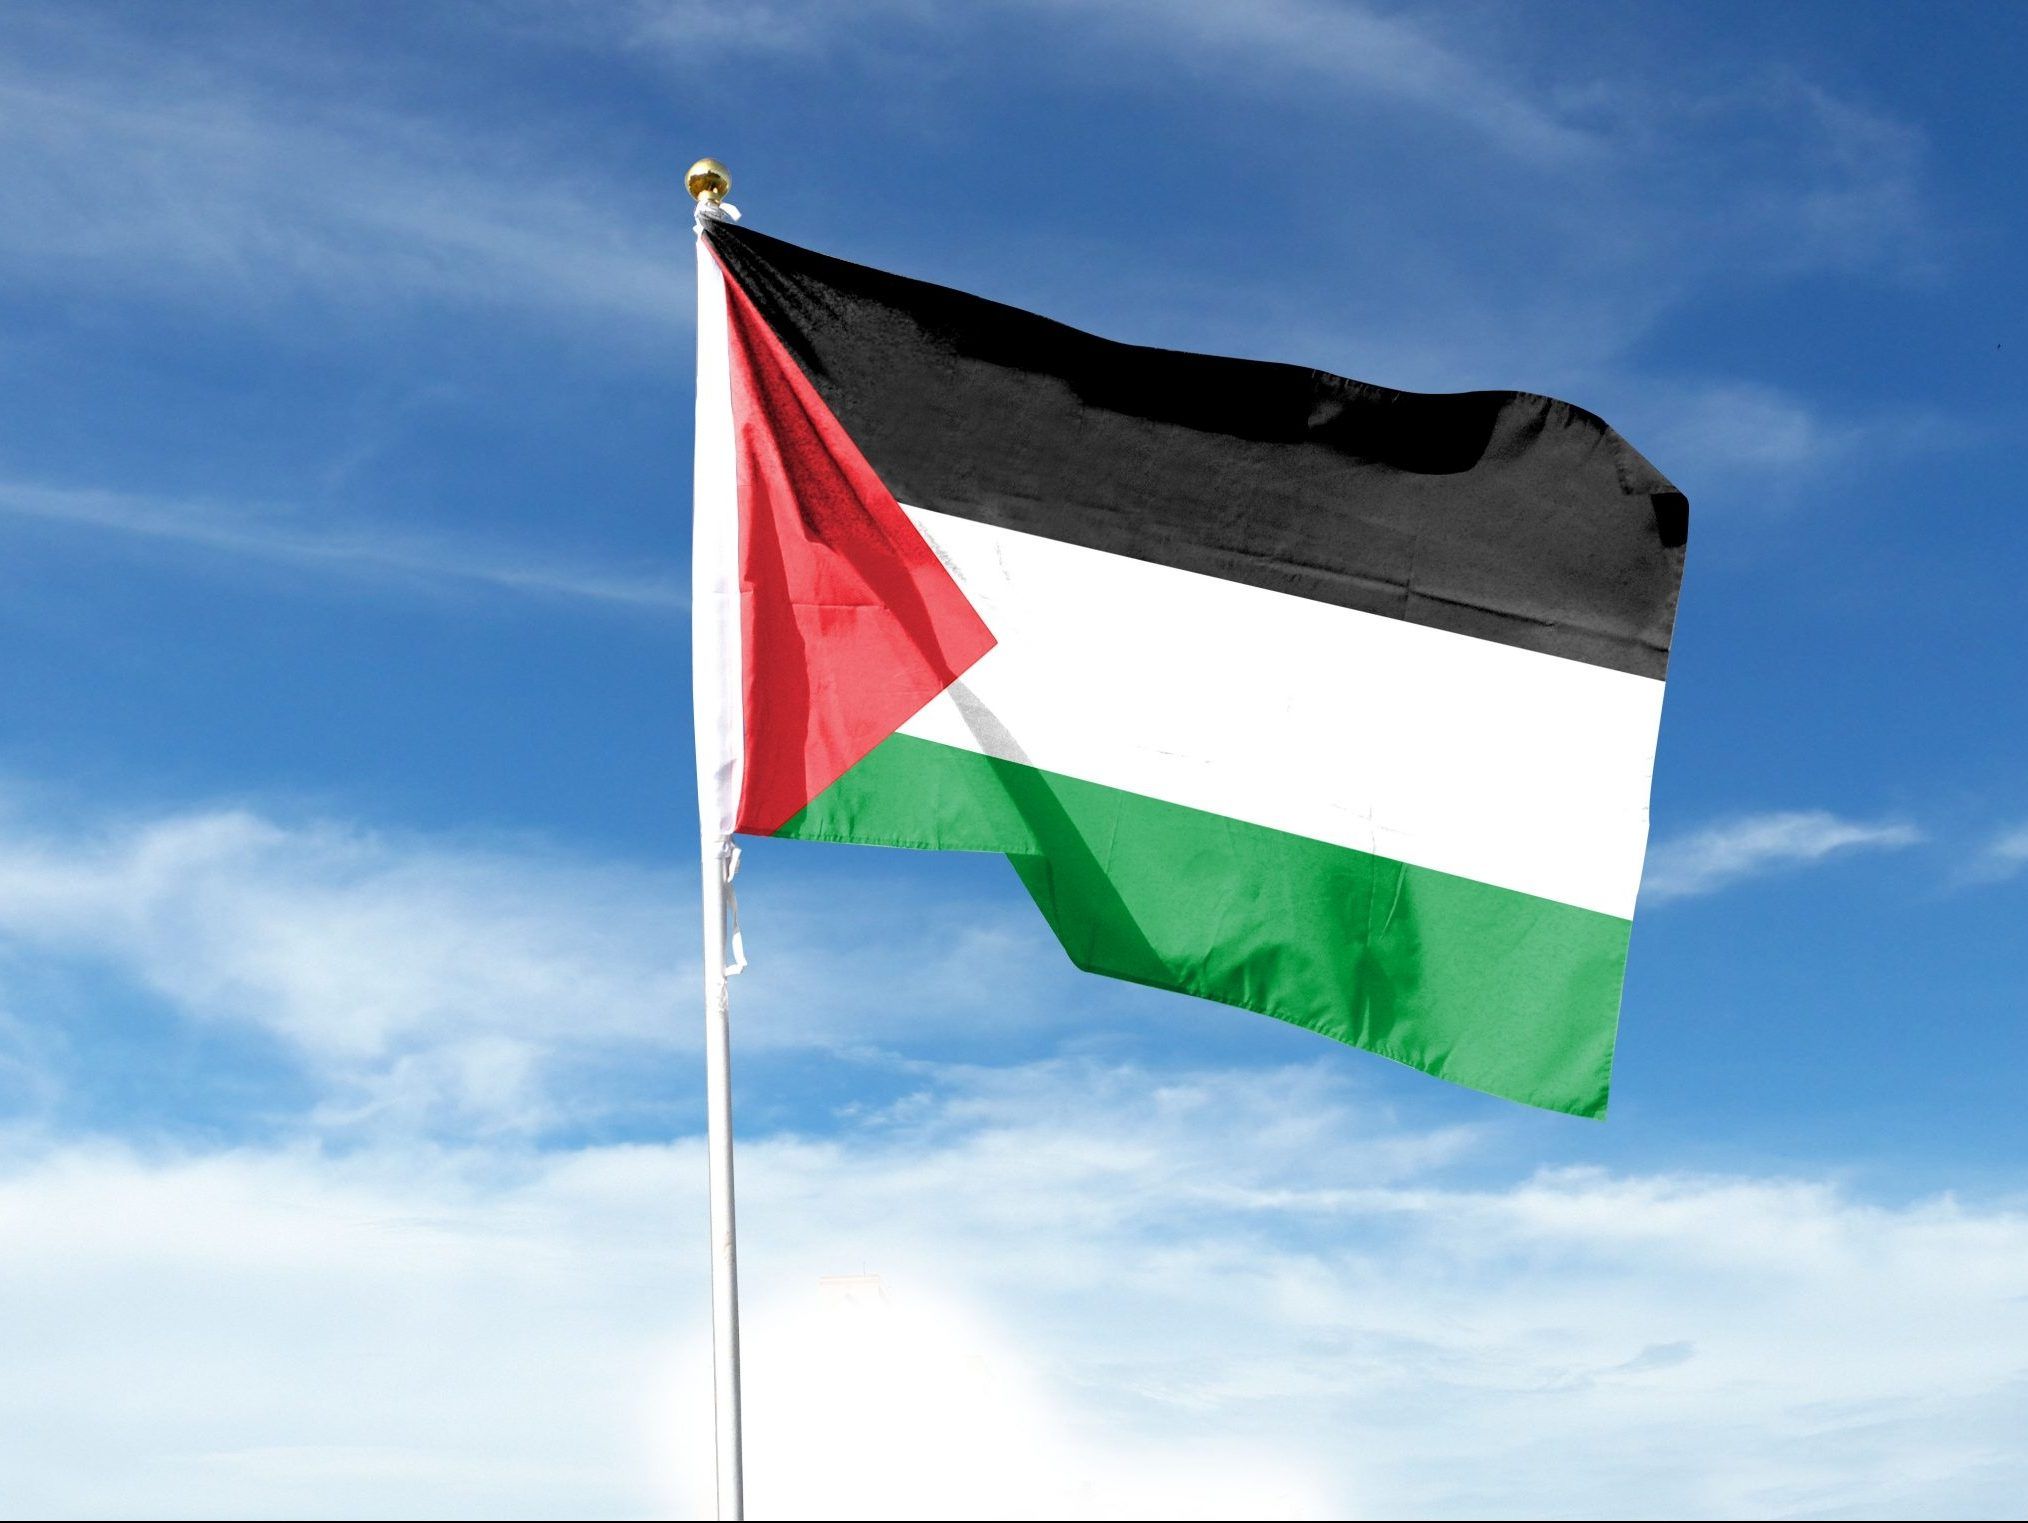 Palestinian flag lodged in public Hanukkah menorah in sparks outcry ...